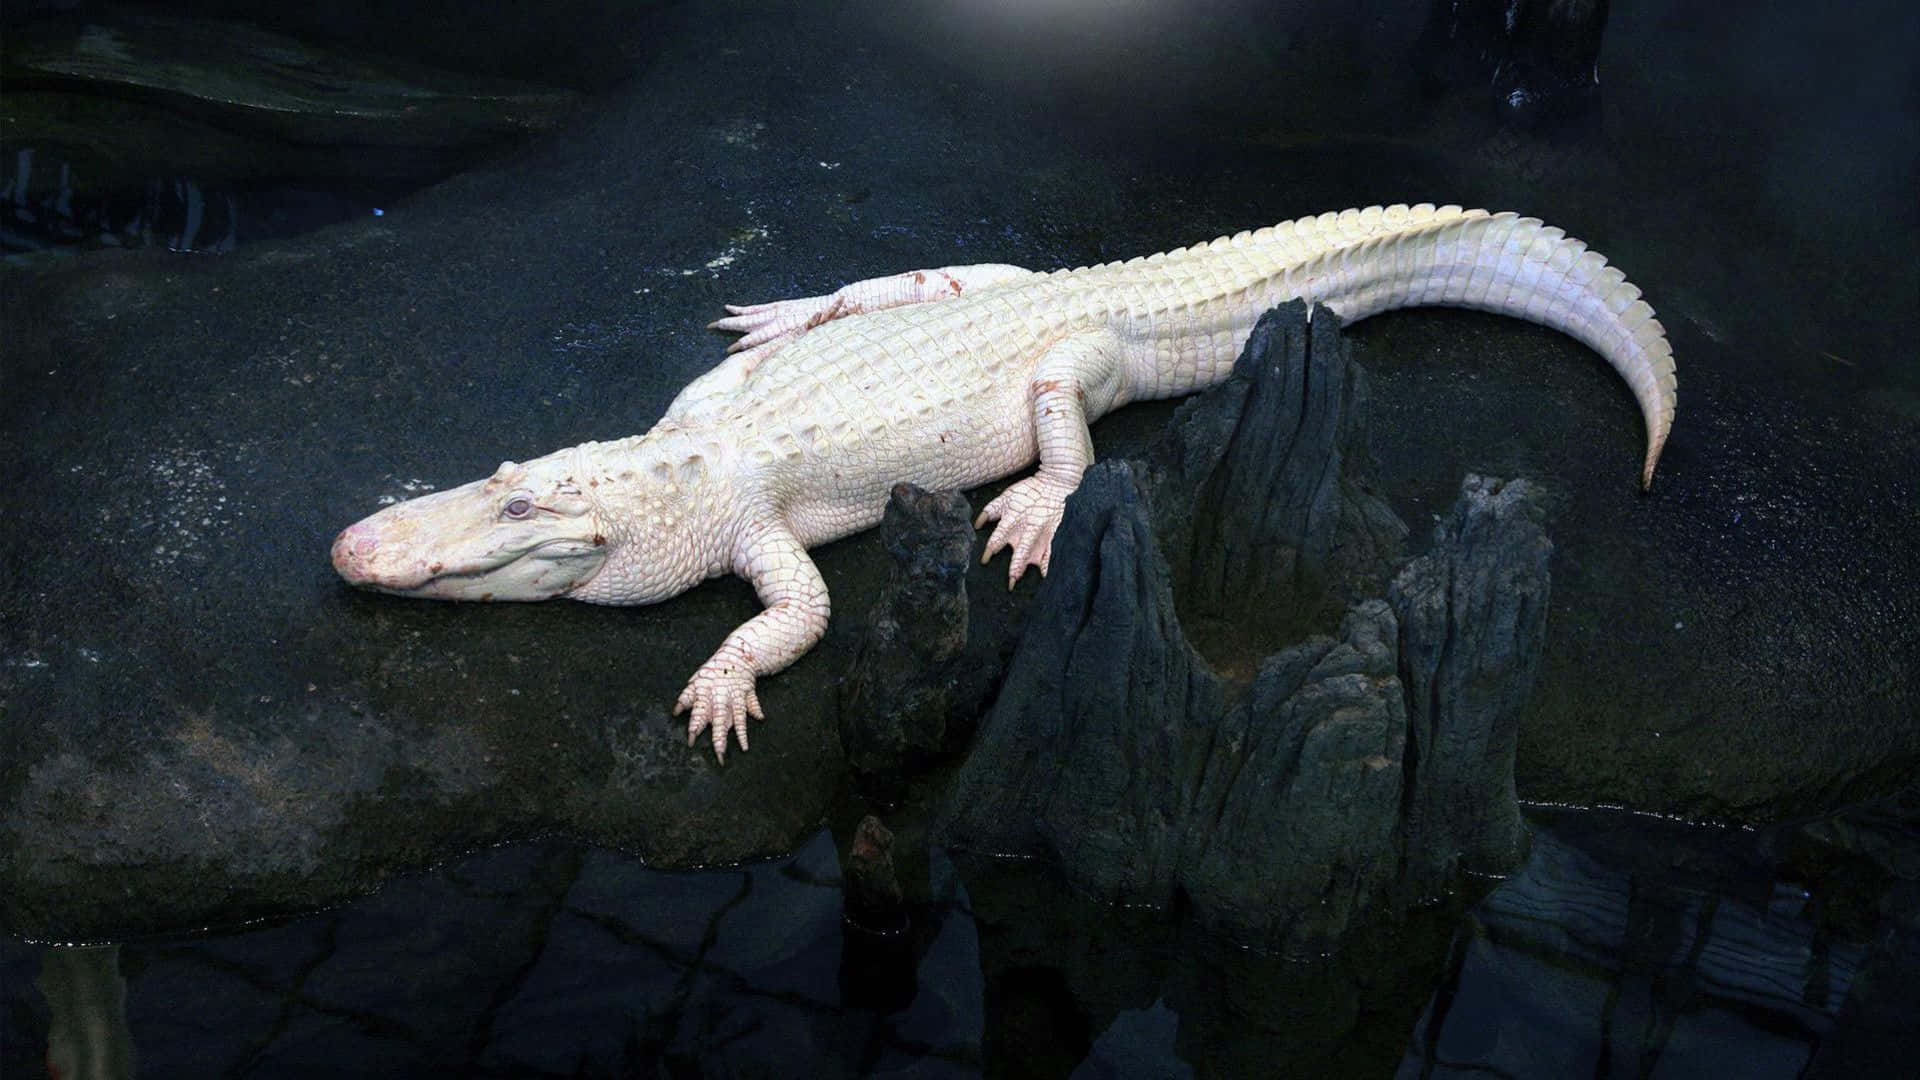 An alligator enjoying a sunny day in the marsh.